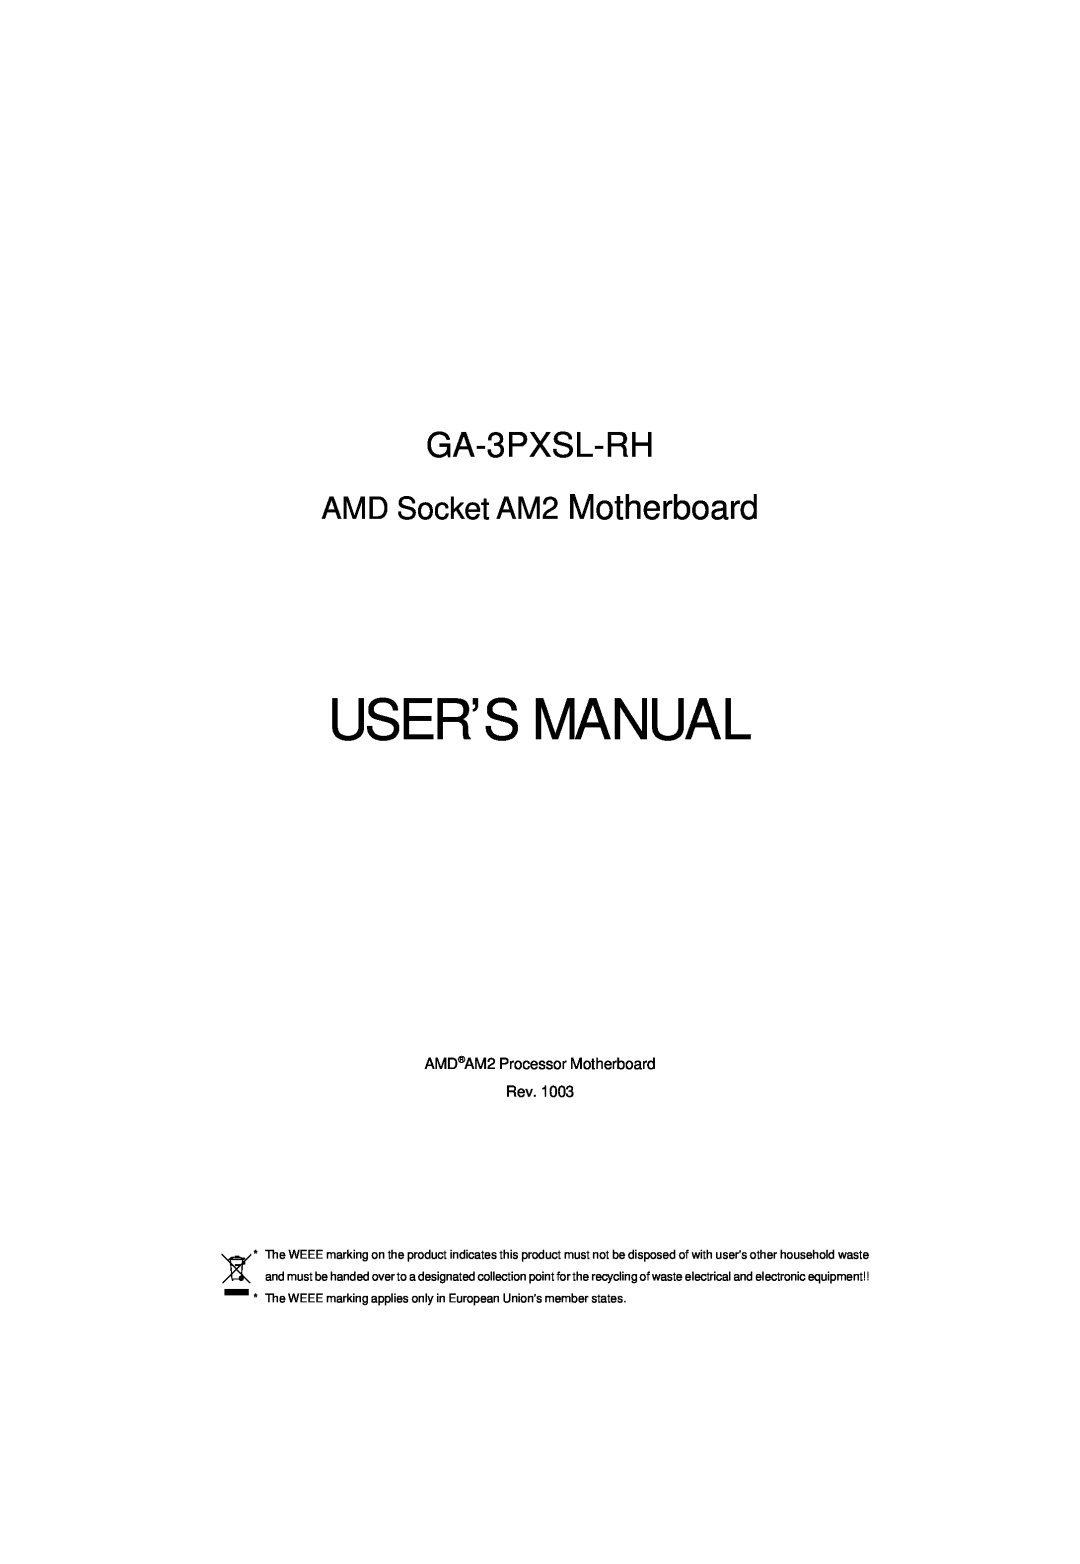 Gigabyte GA-3PXSL-RH user manual User’S Manual, AMD Socket AM2 Motherboard 